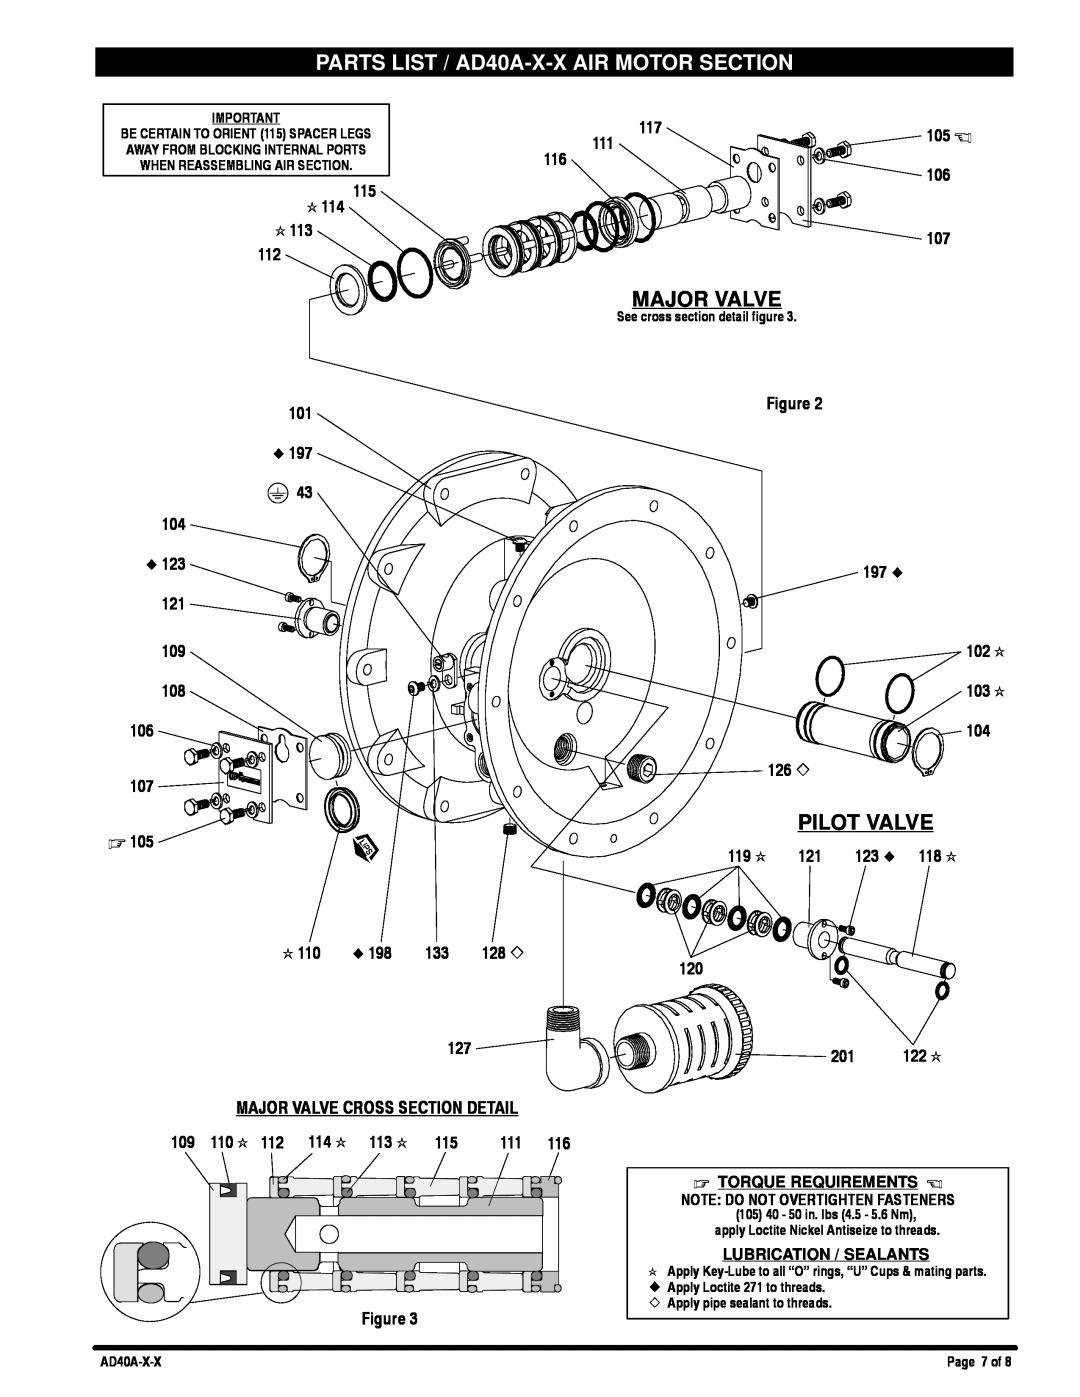 Ingersoll-Rand manual Major Valve, Pilot Valve, PARTS LIST / AD40A-X-XAIR MOTOR SECTION 